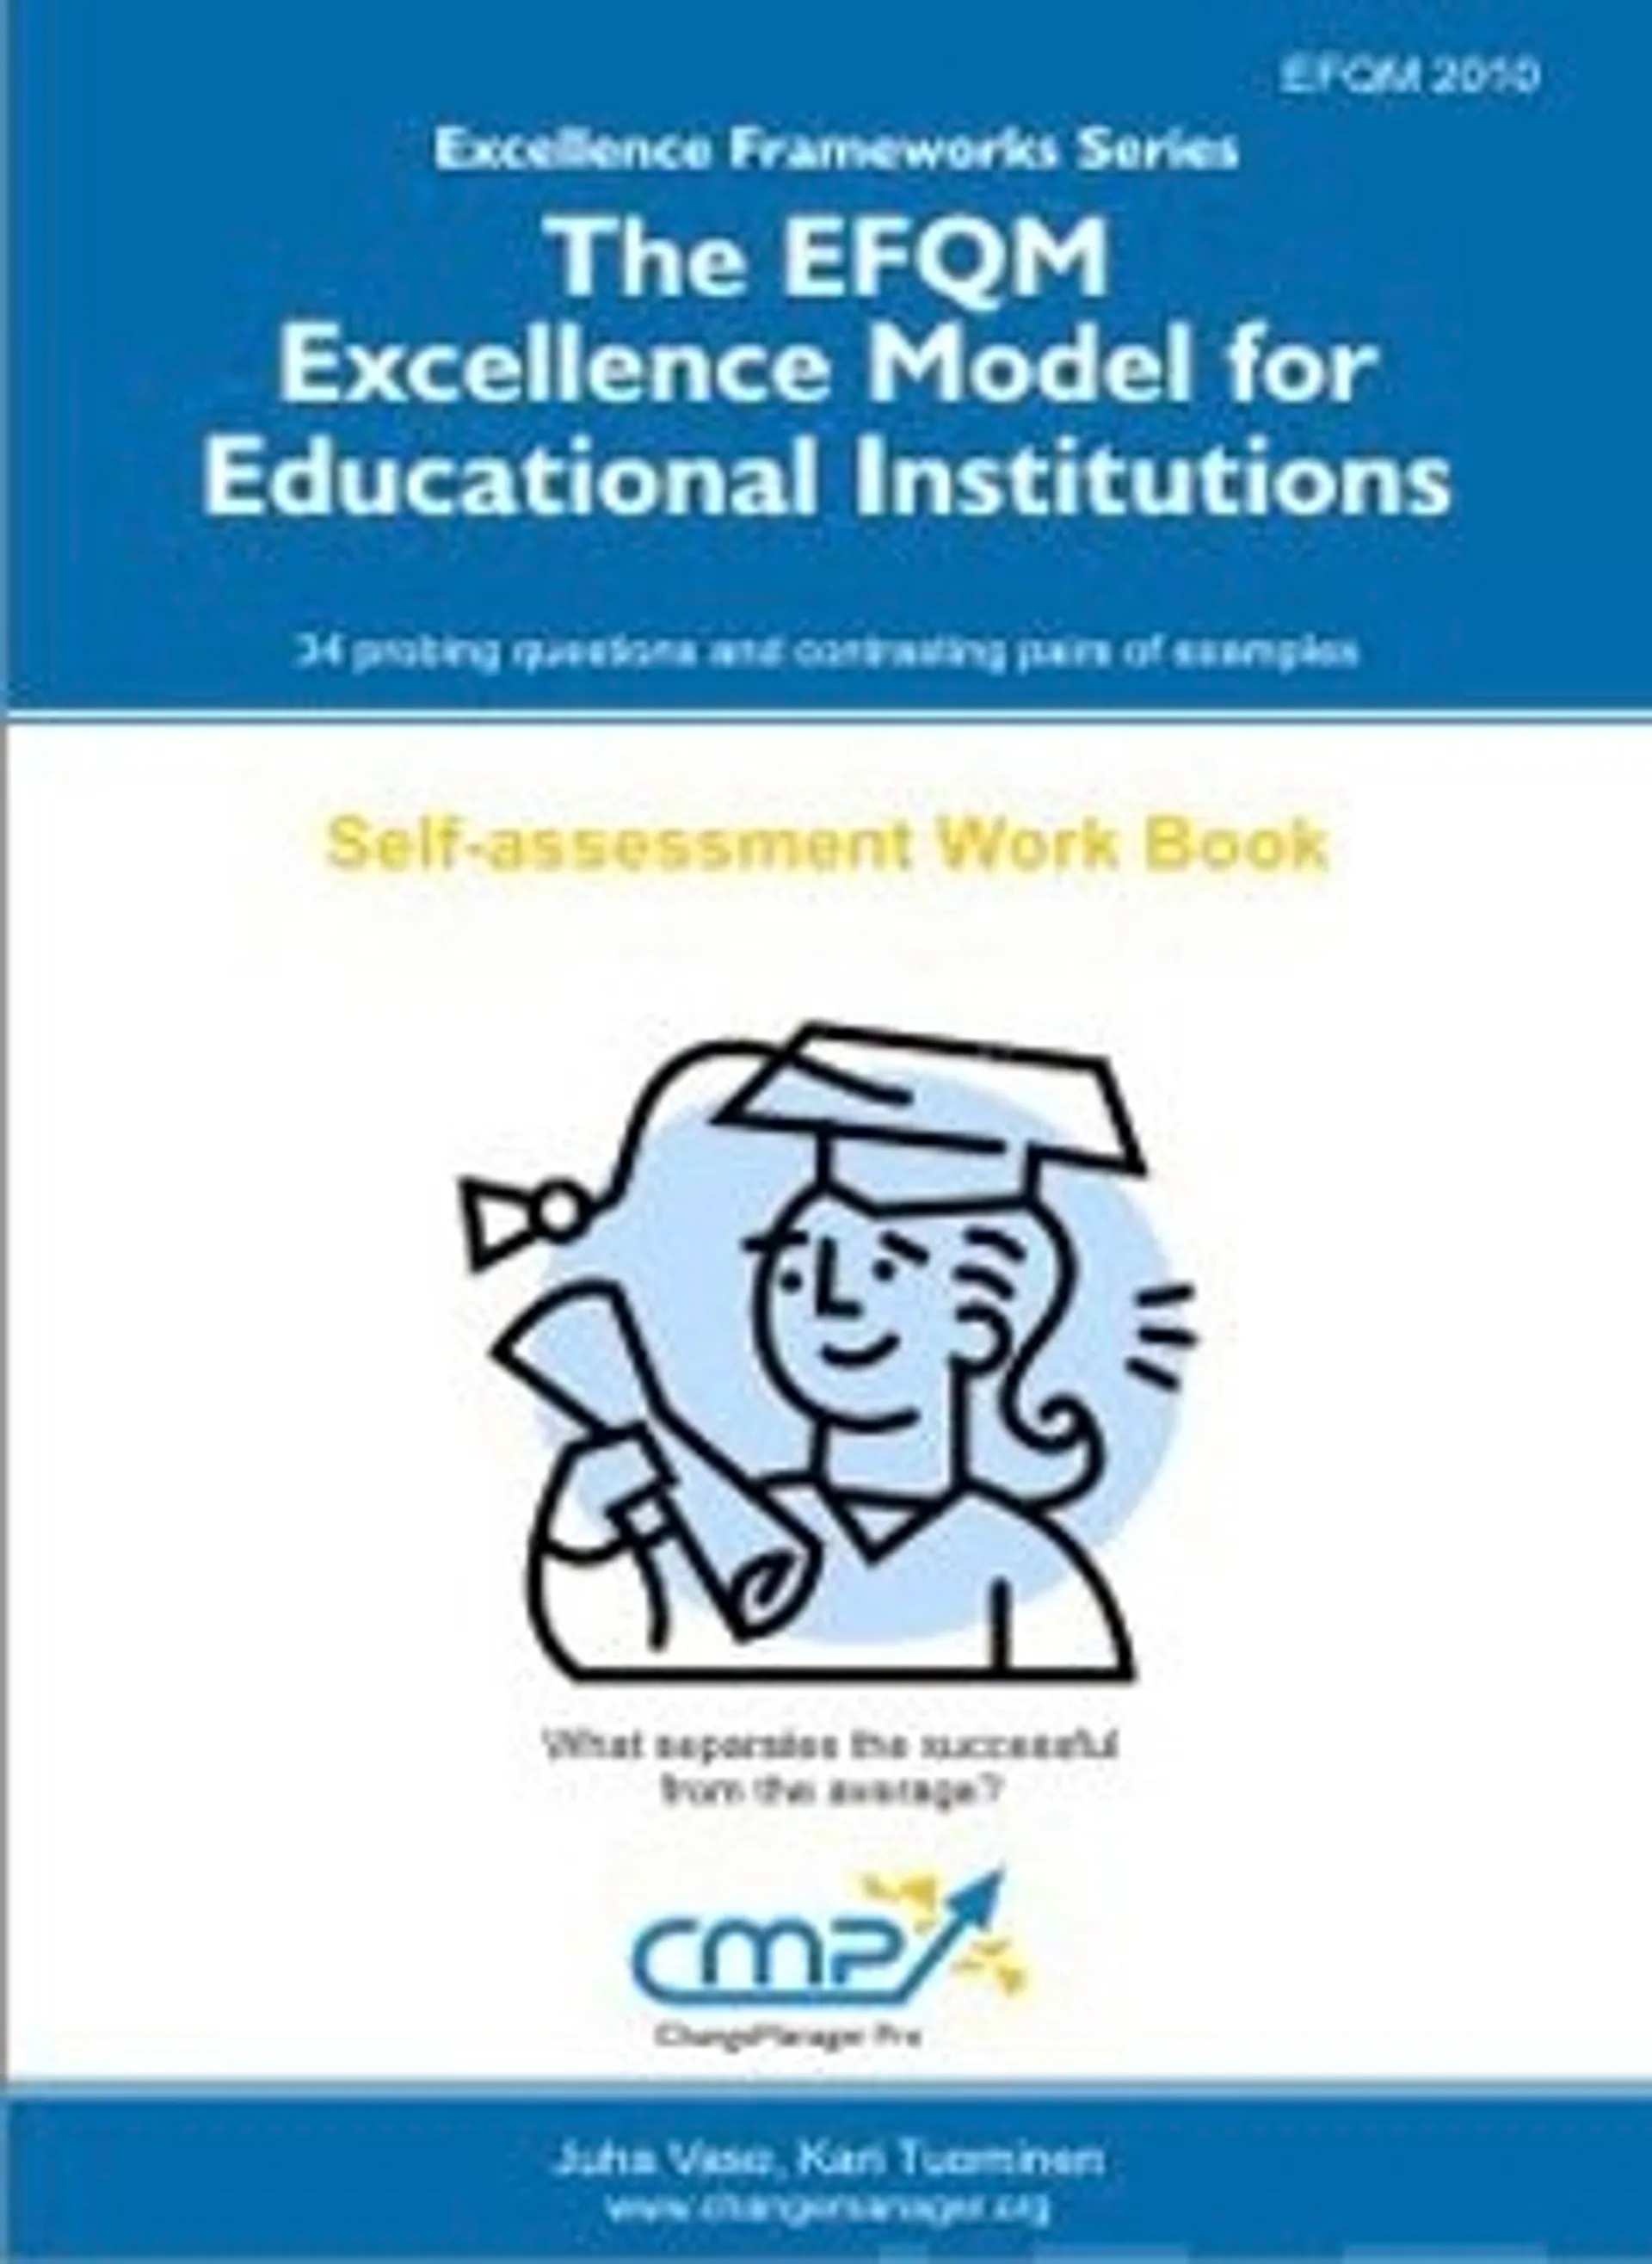 The EFQM Excellence Model for Educational Institutions - EFQM 2010